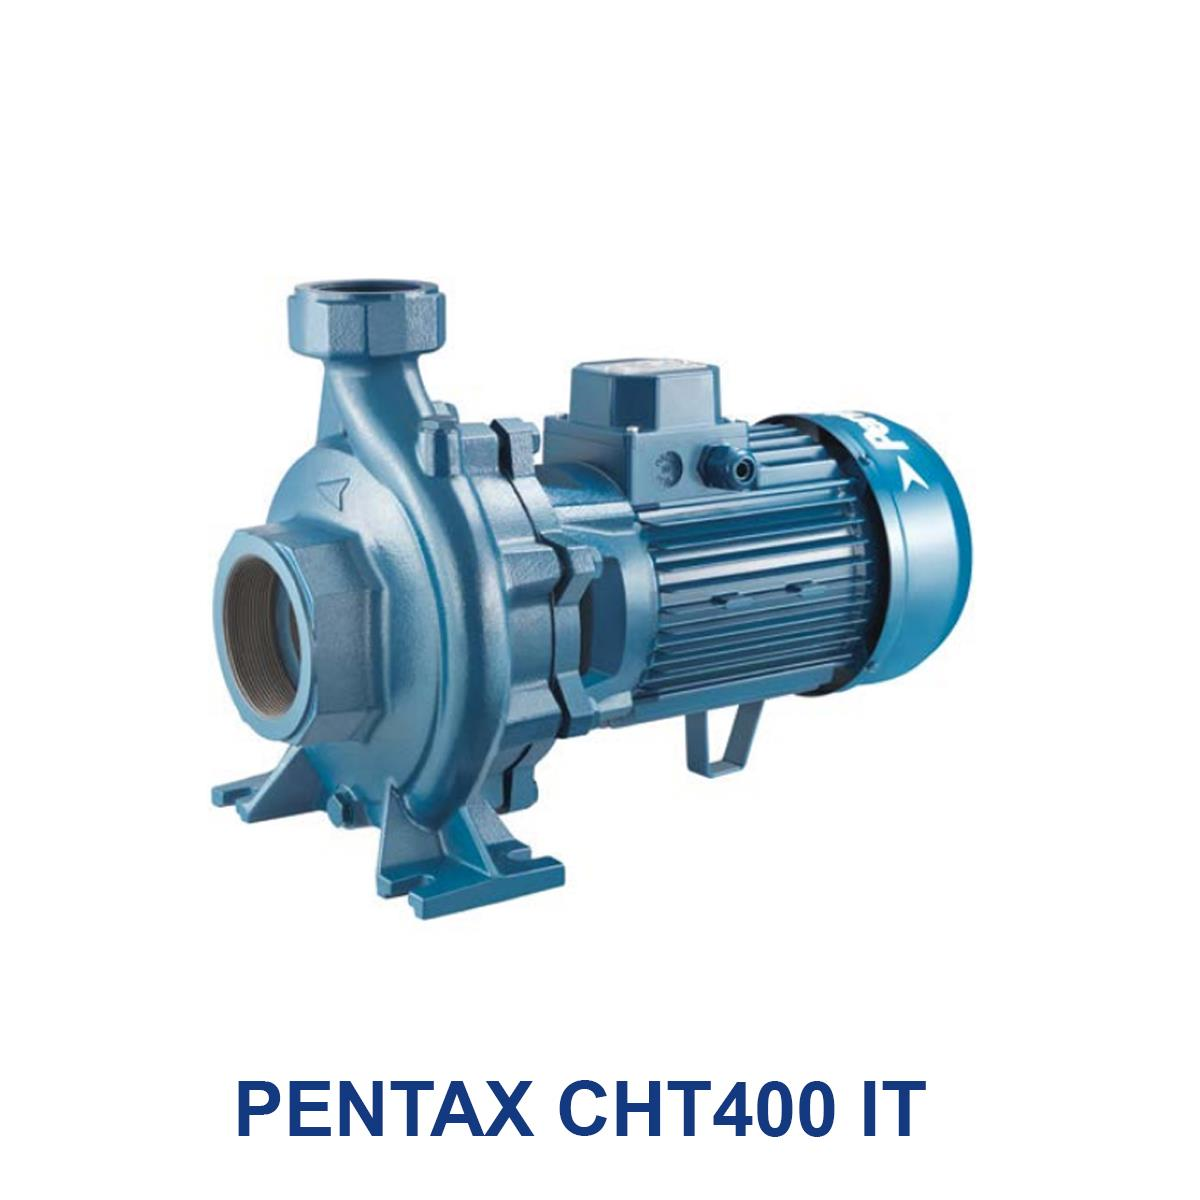 PENTAX-CHT400-IT